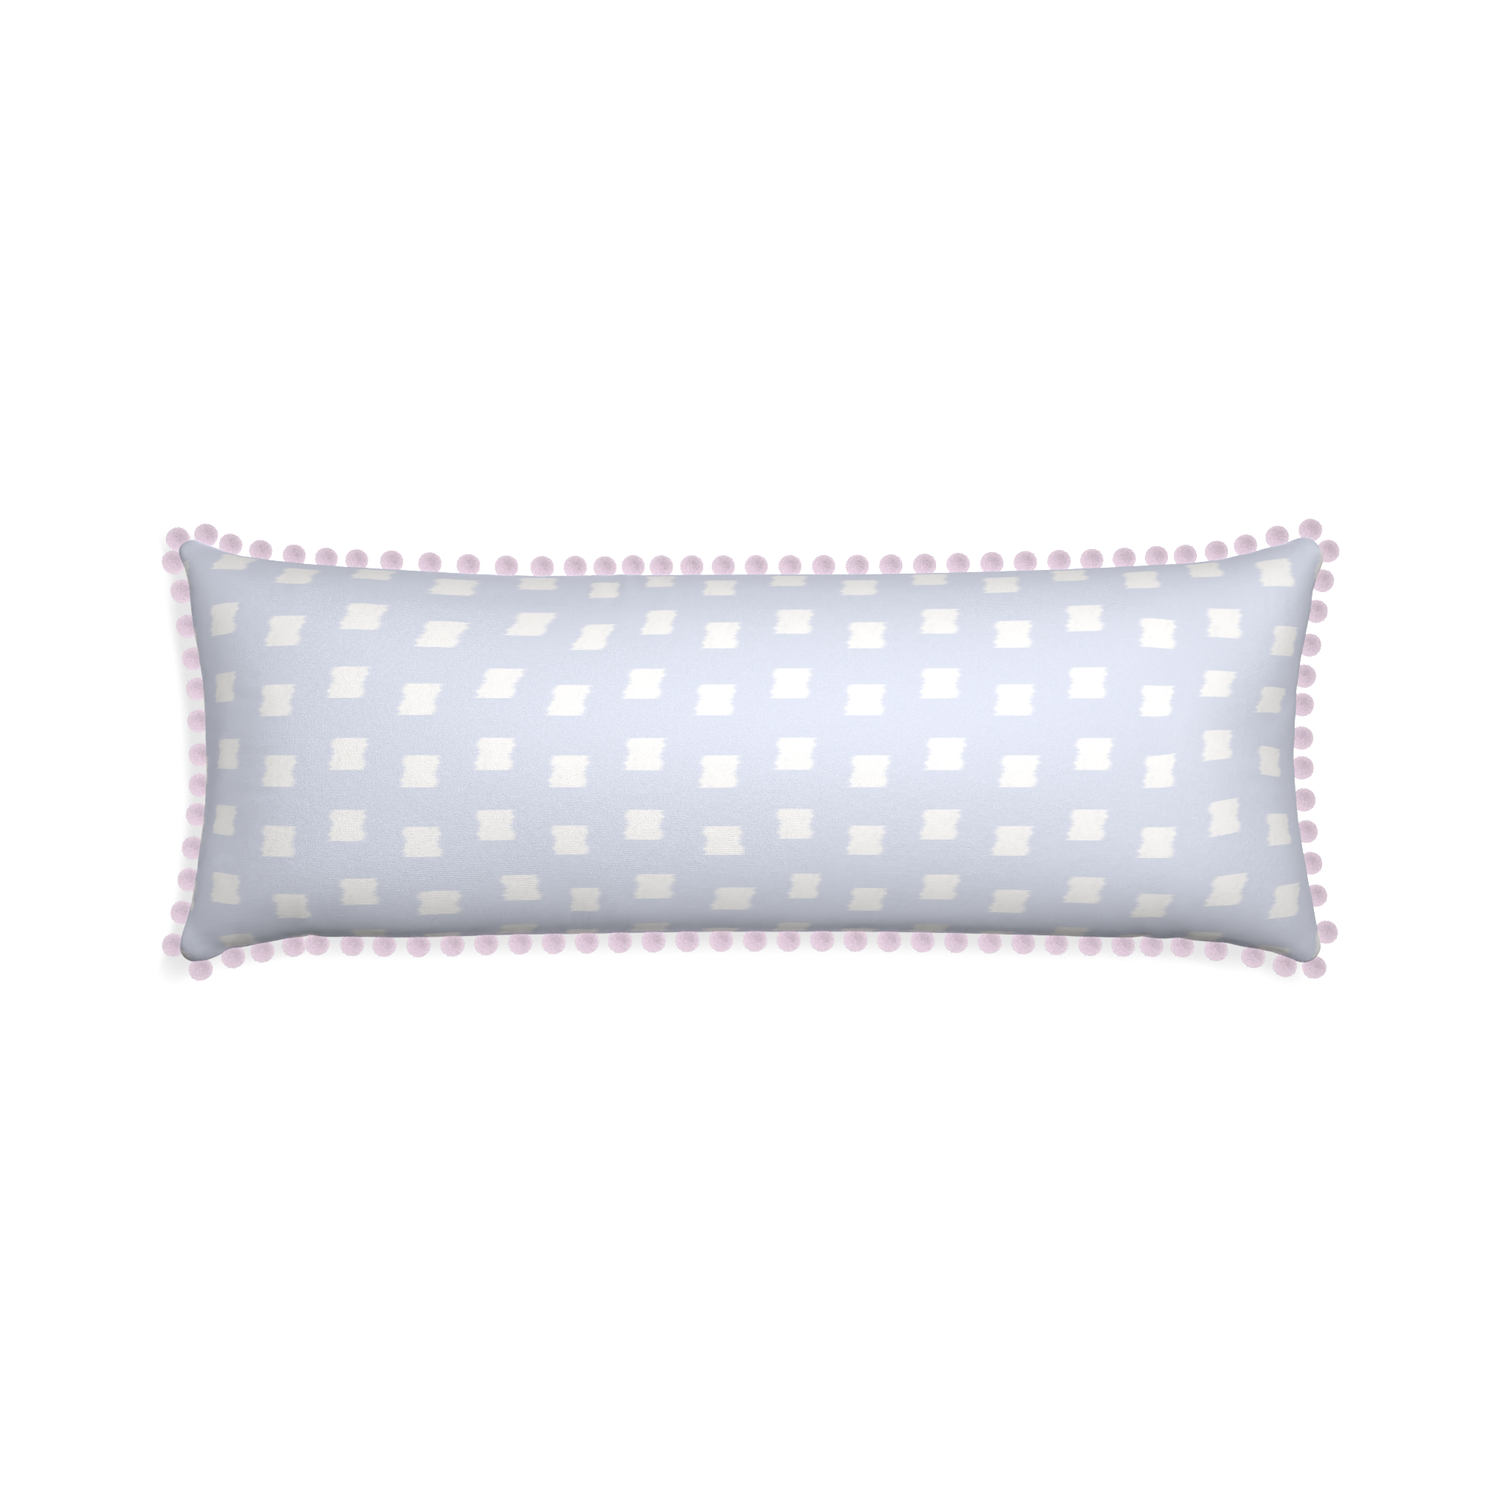 Xl-lumbar denton custom pillow with l on white background